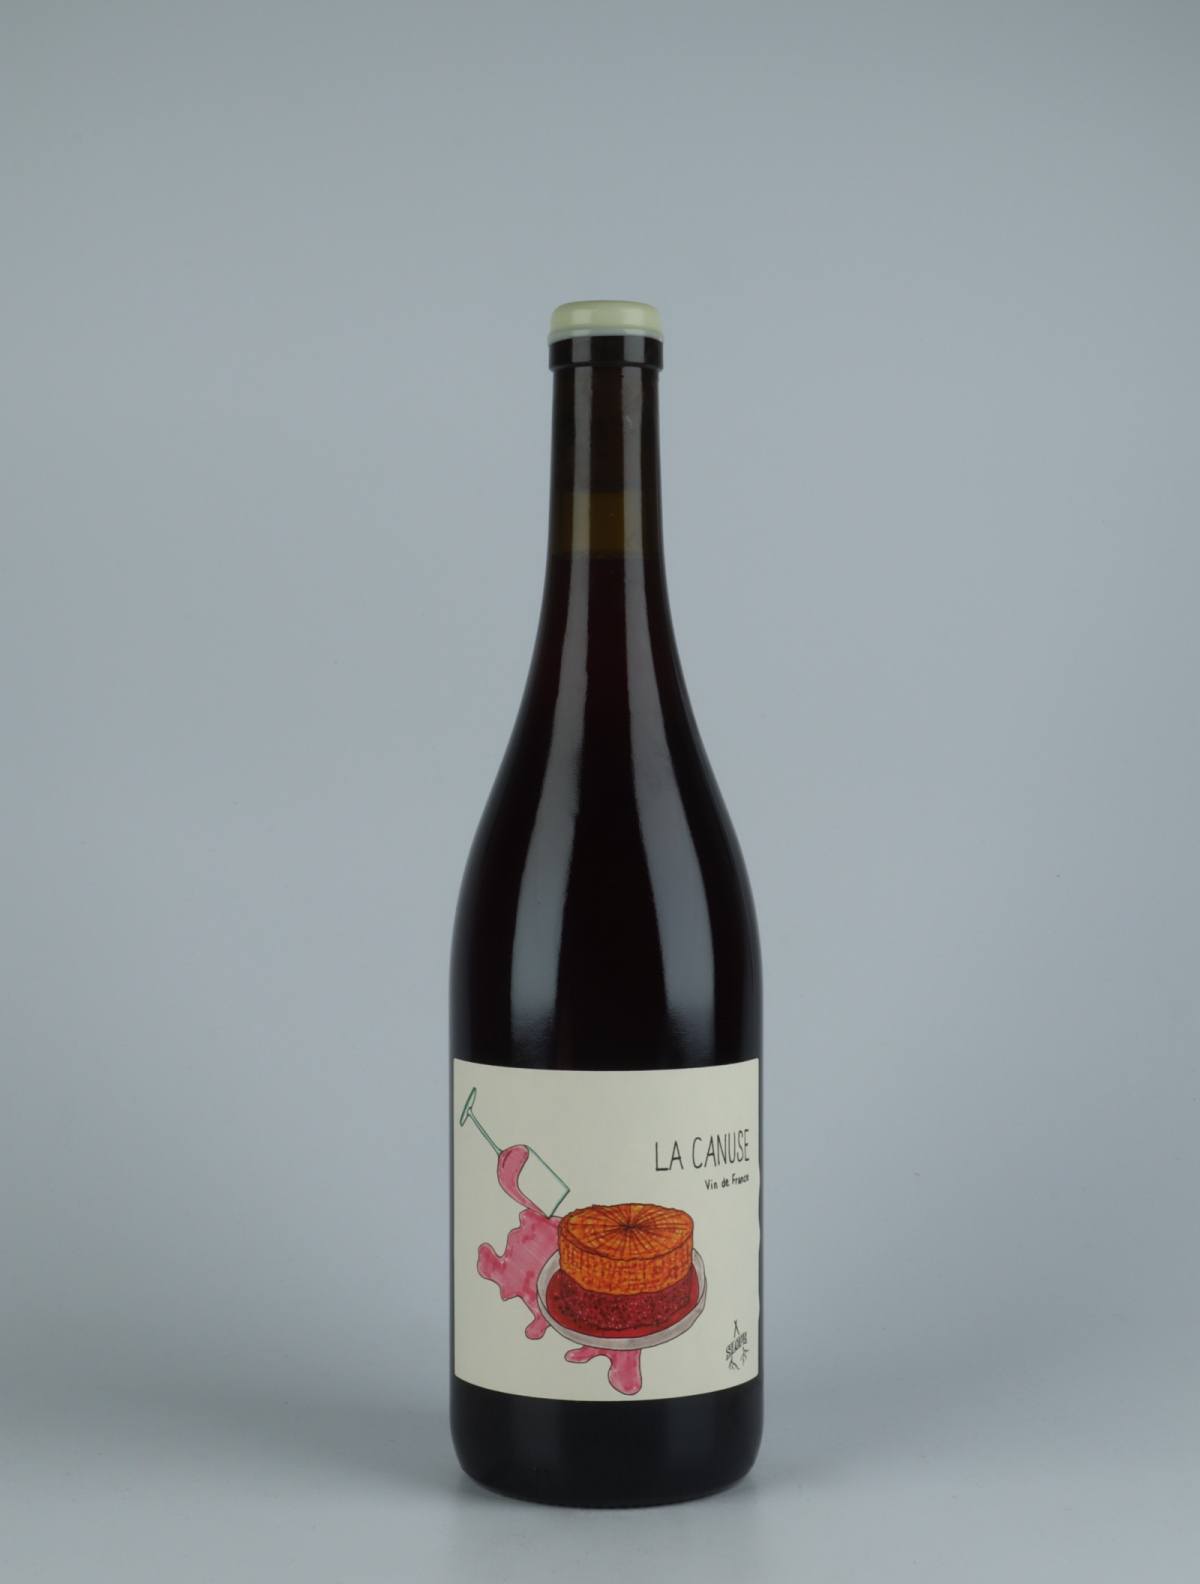 A bottle 2020 La Canuse Red wine from Slope, Rhône in France